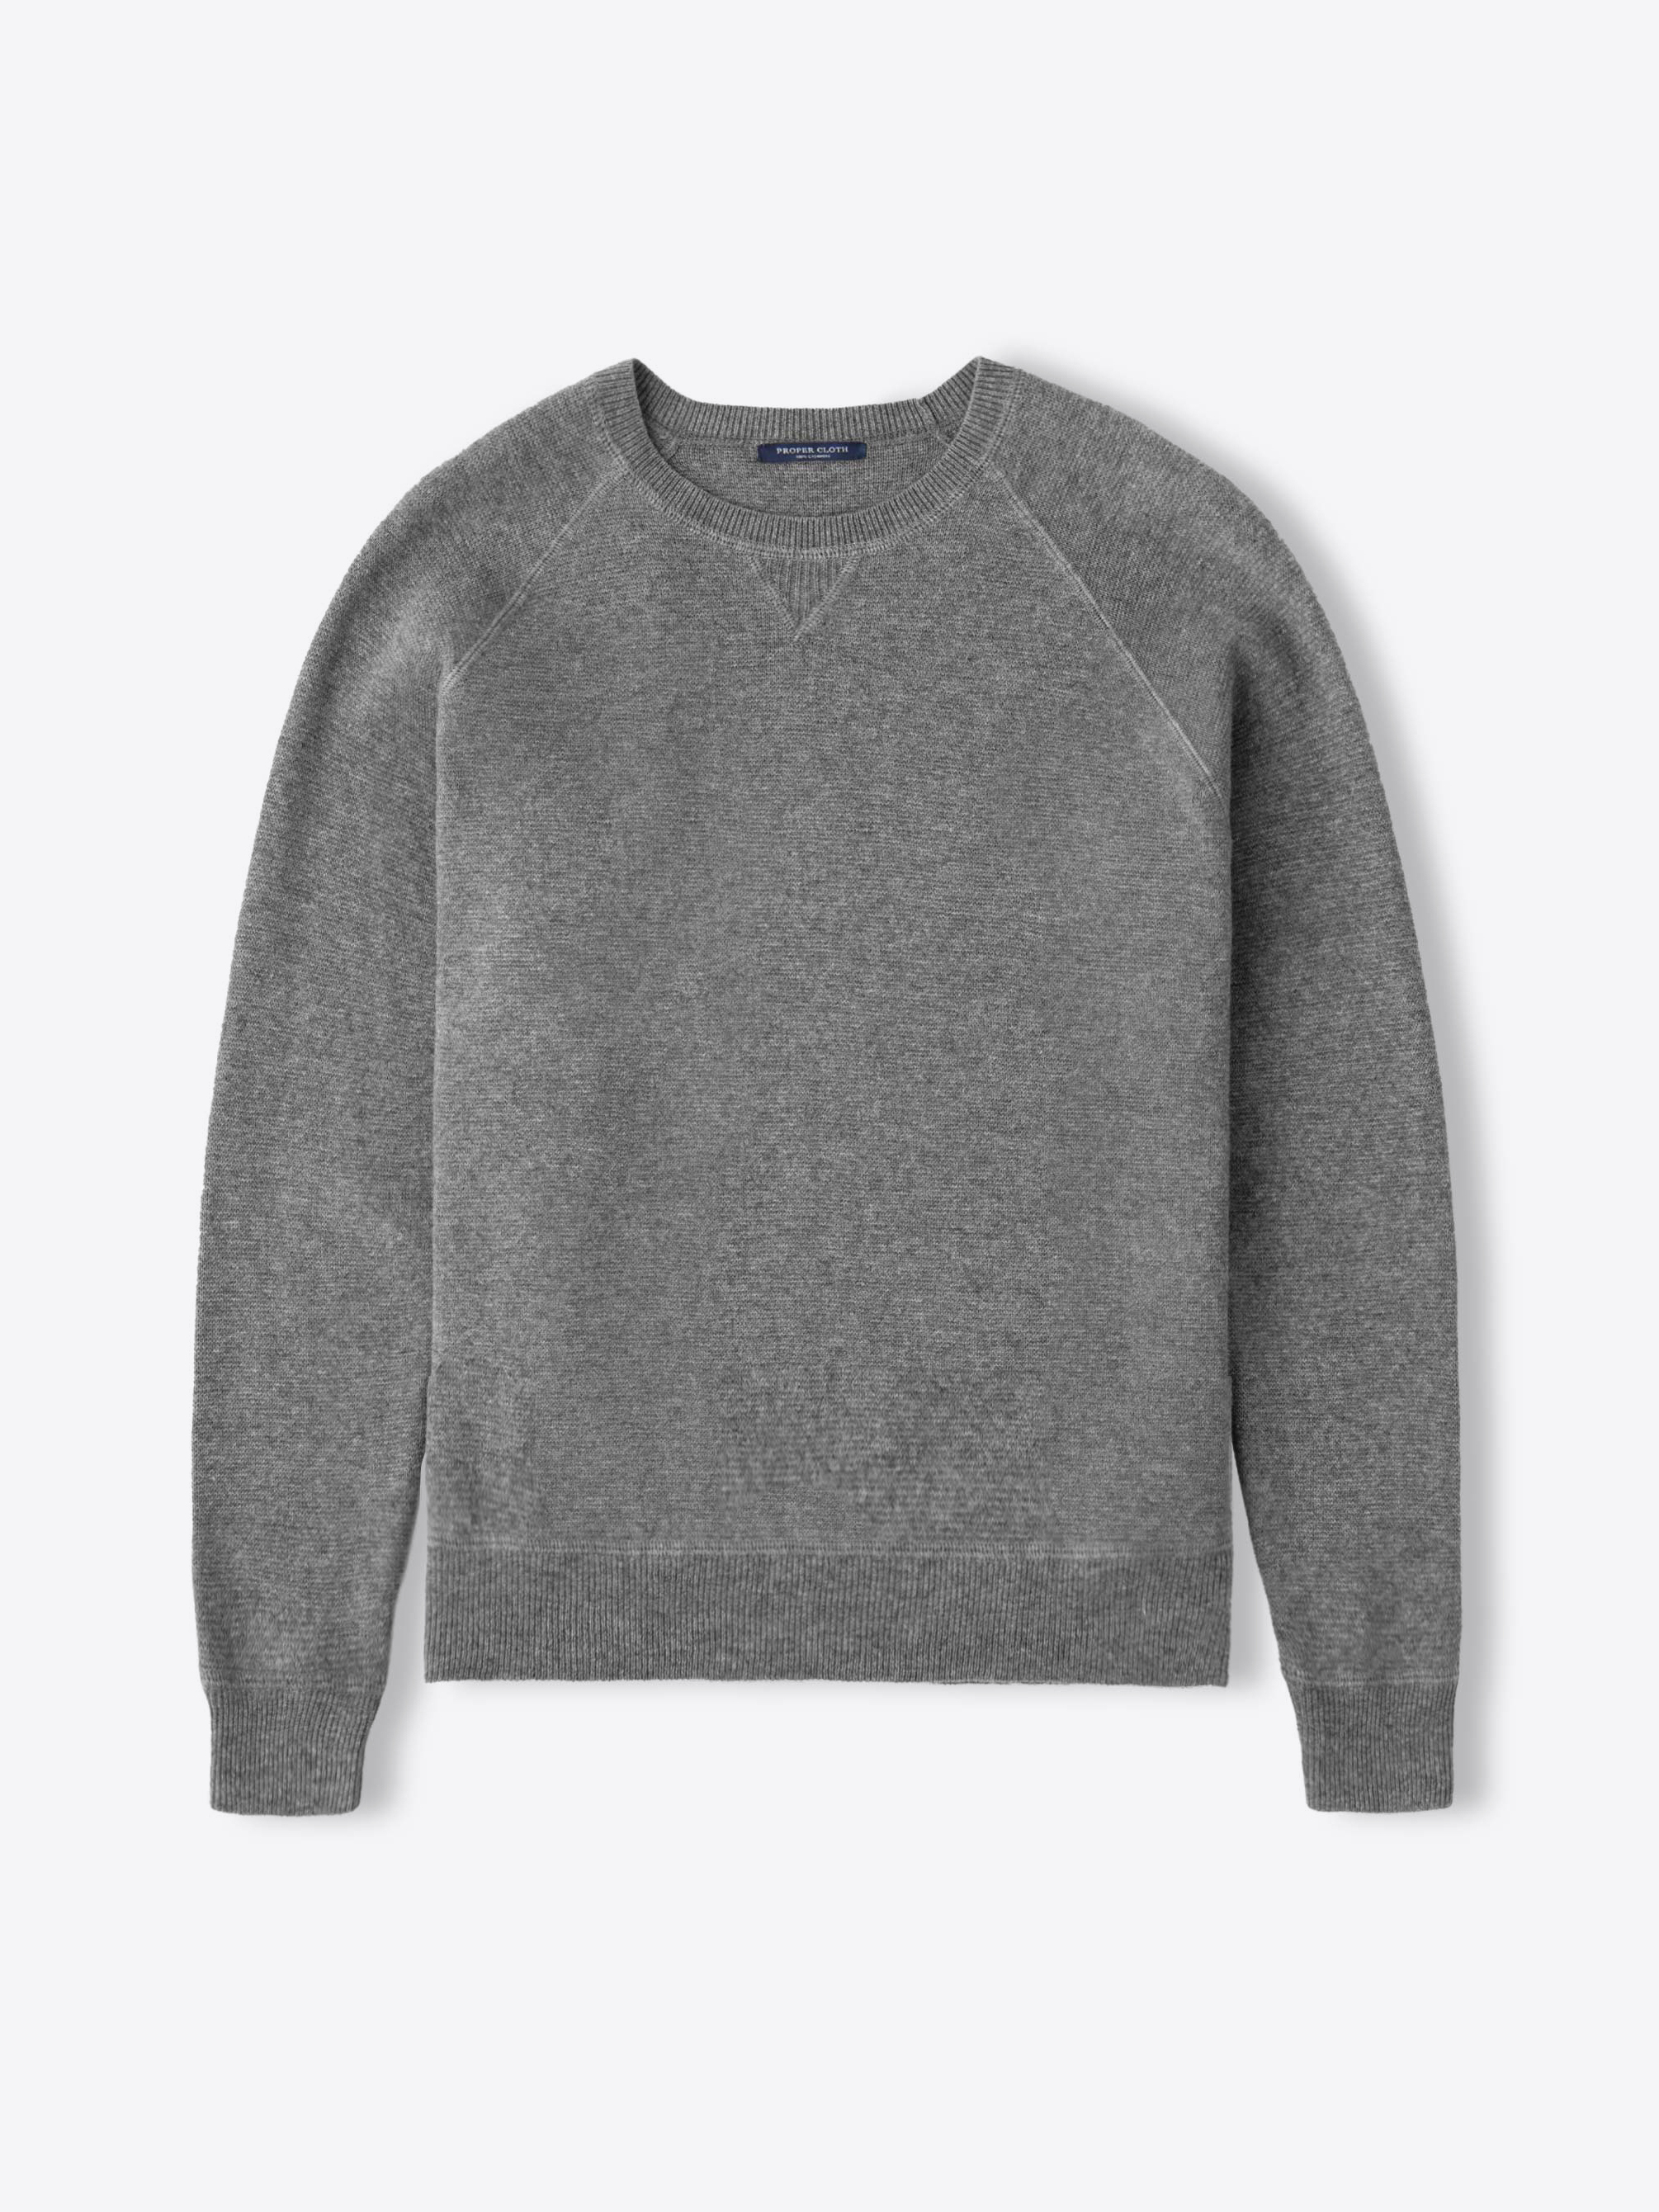 Zoom Image of Grey Wool and Cotton Raglan Crewneck Sweater